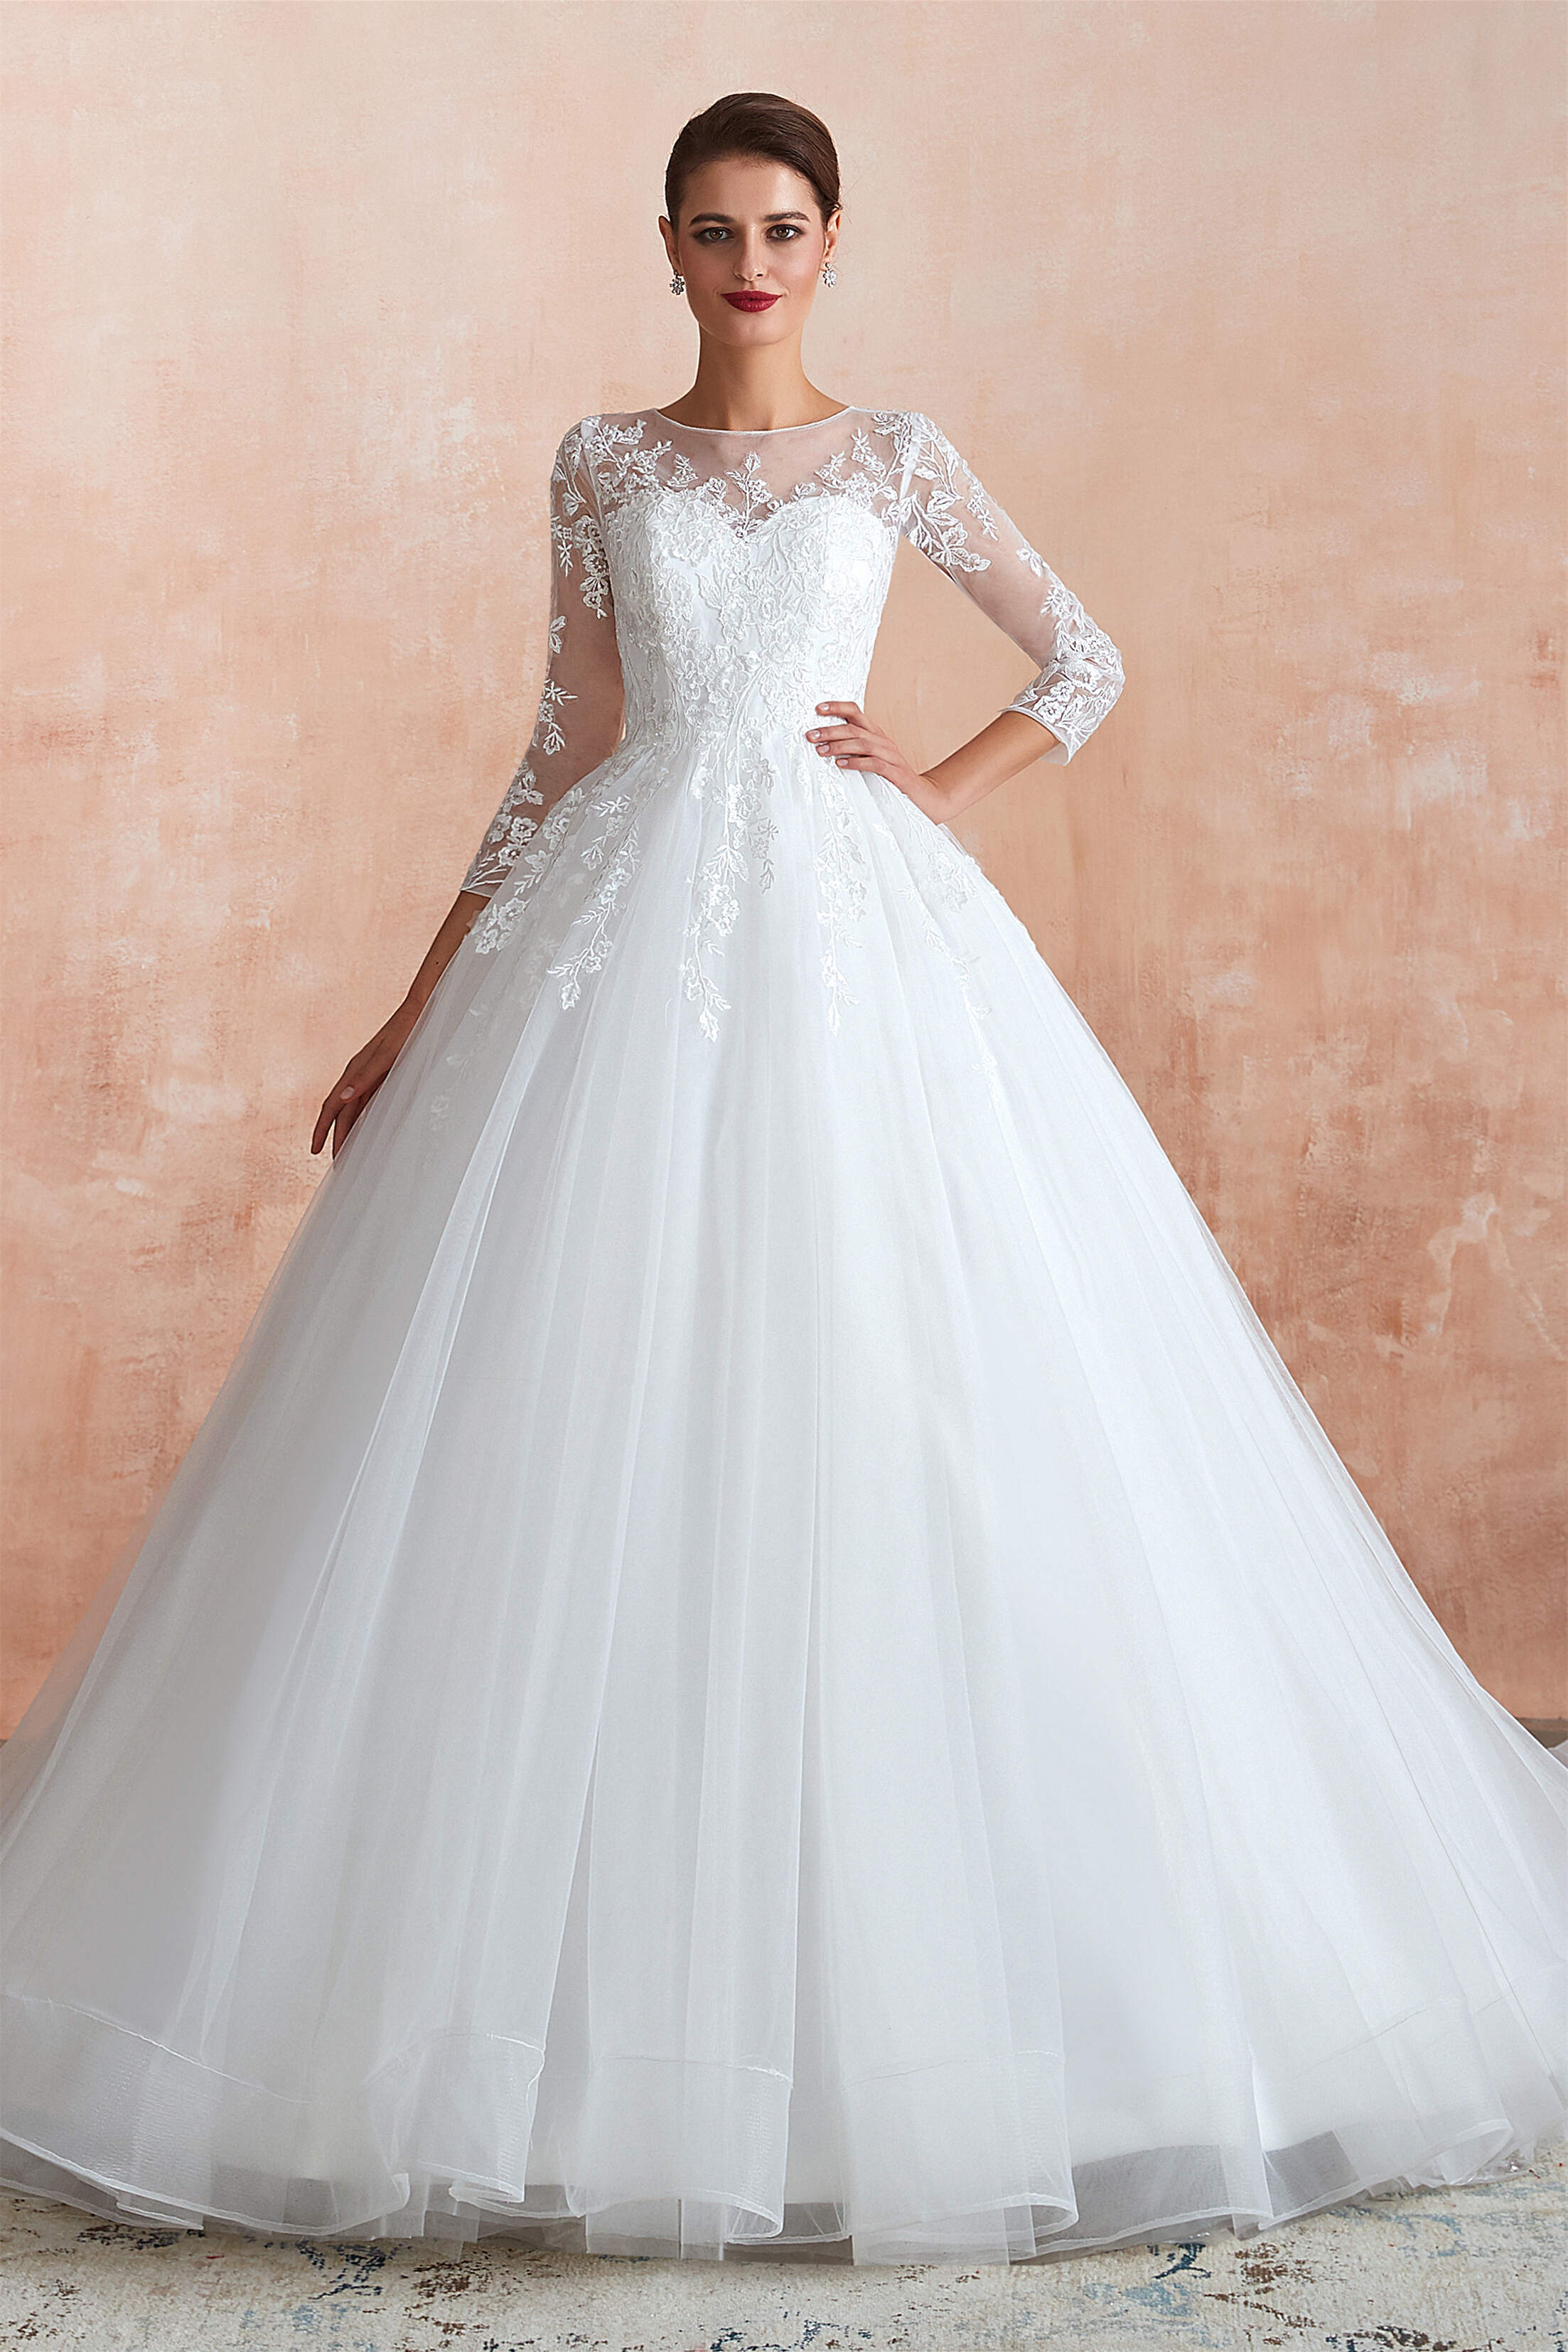 Wedding Dress Long Sleeve, Lace Jewel White Tulle Wedding Dresses with 3/4 Sleeves